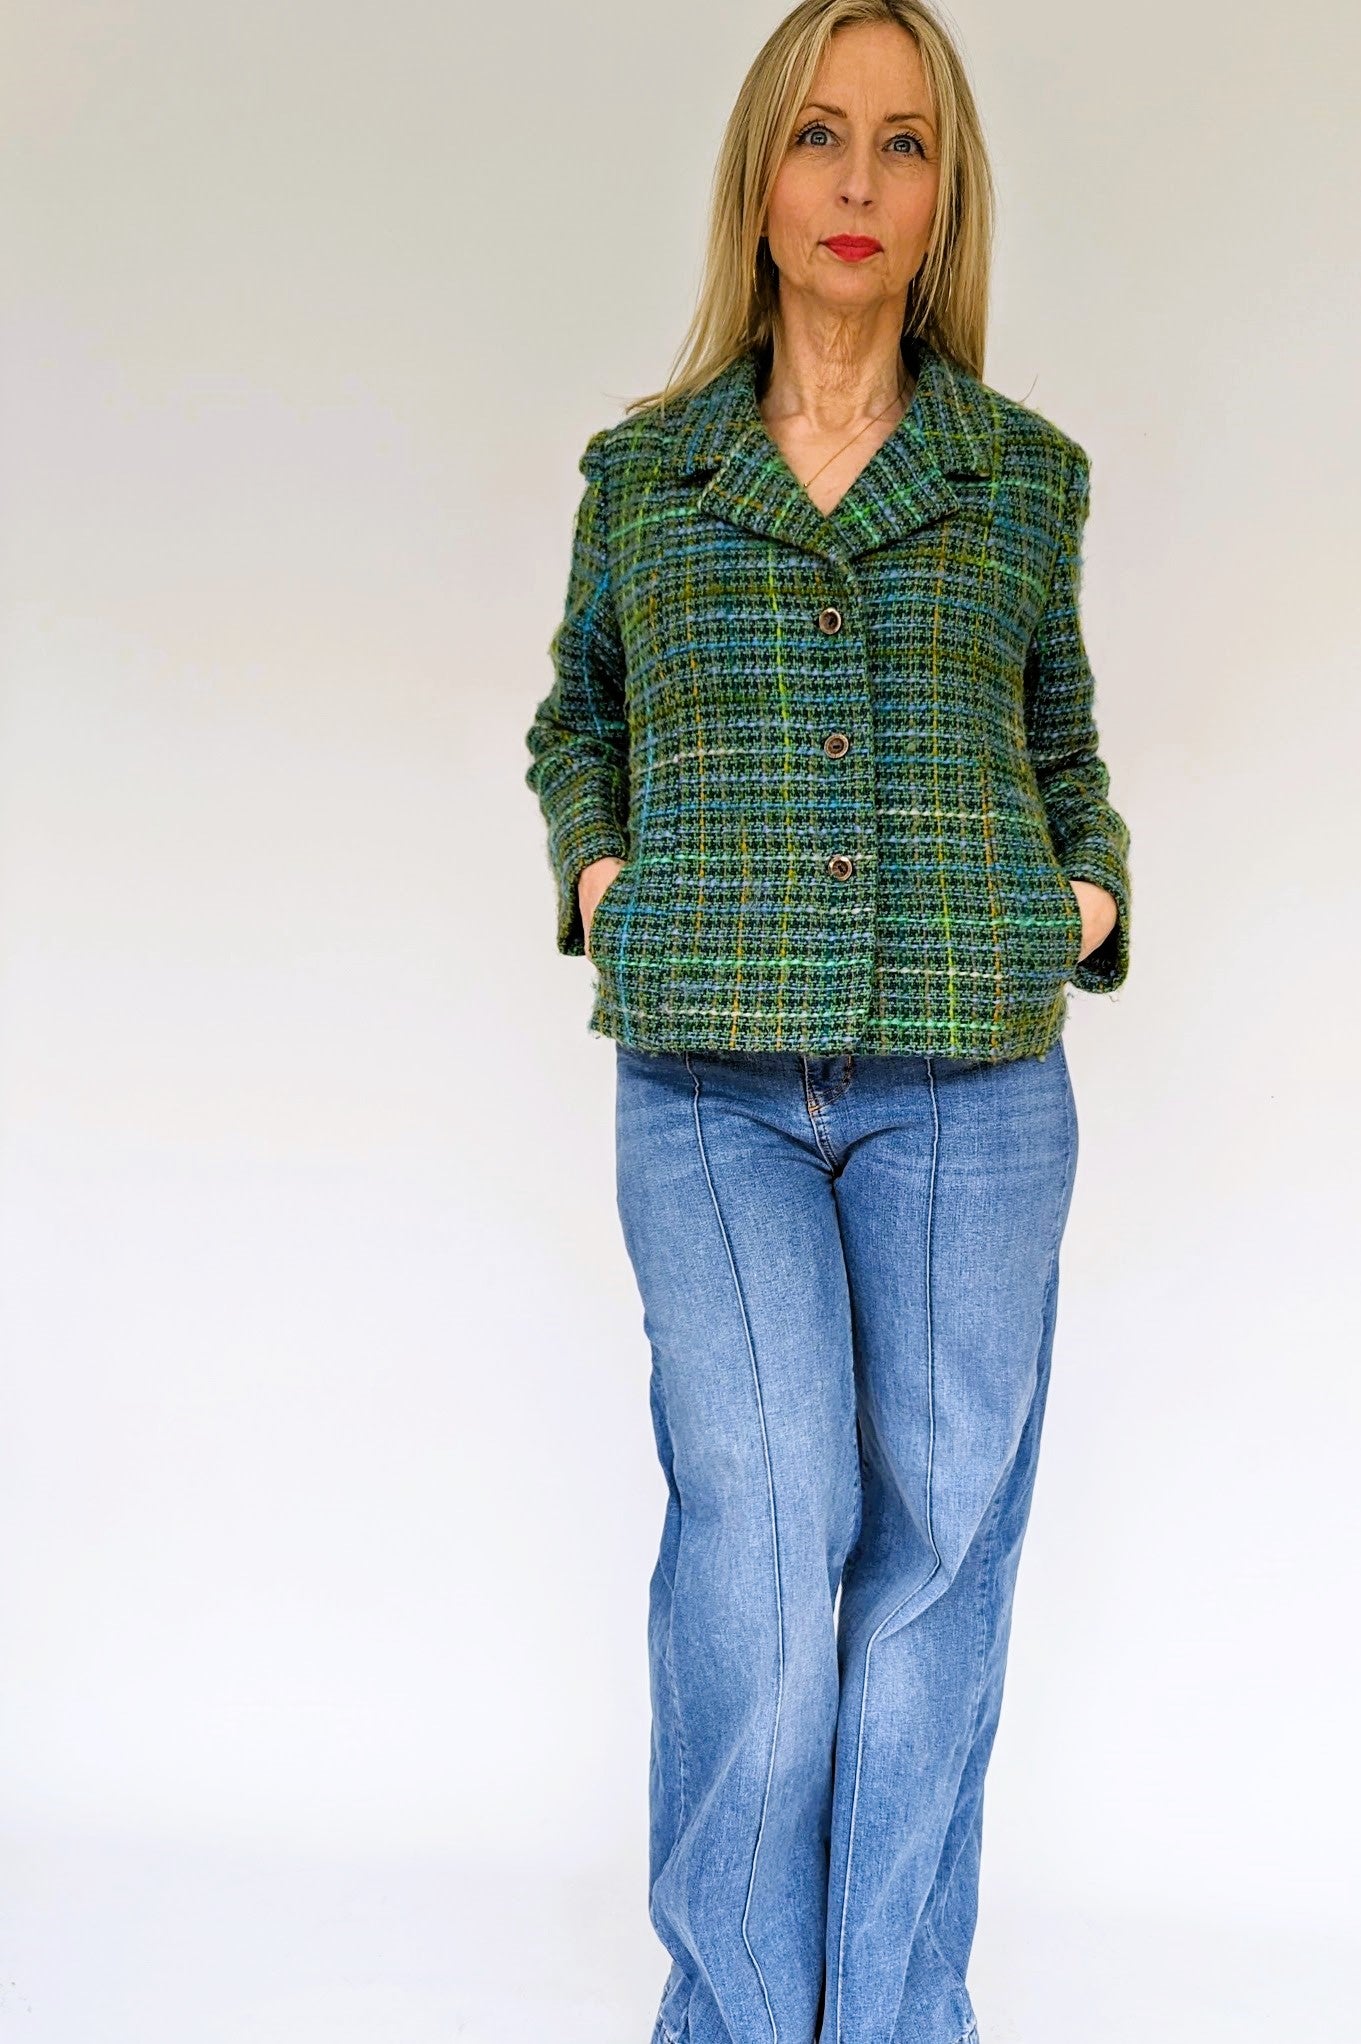 Short 60s Tweed vintage green and blue Scottish wool jacket